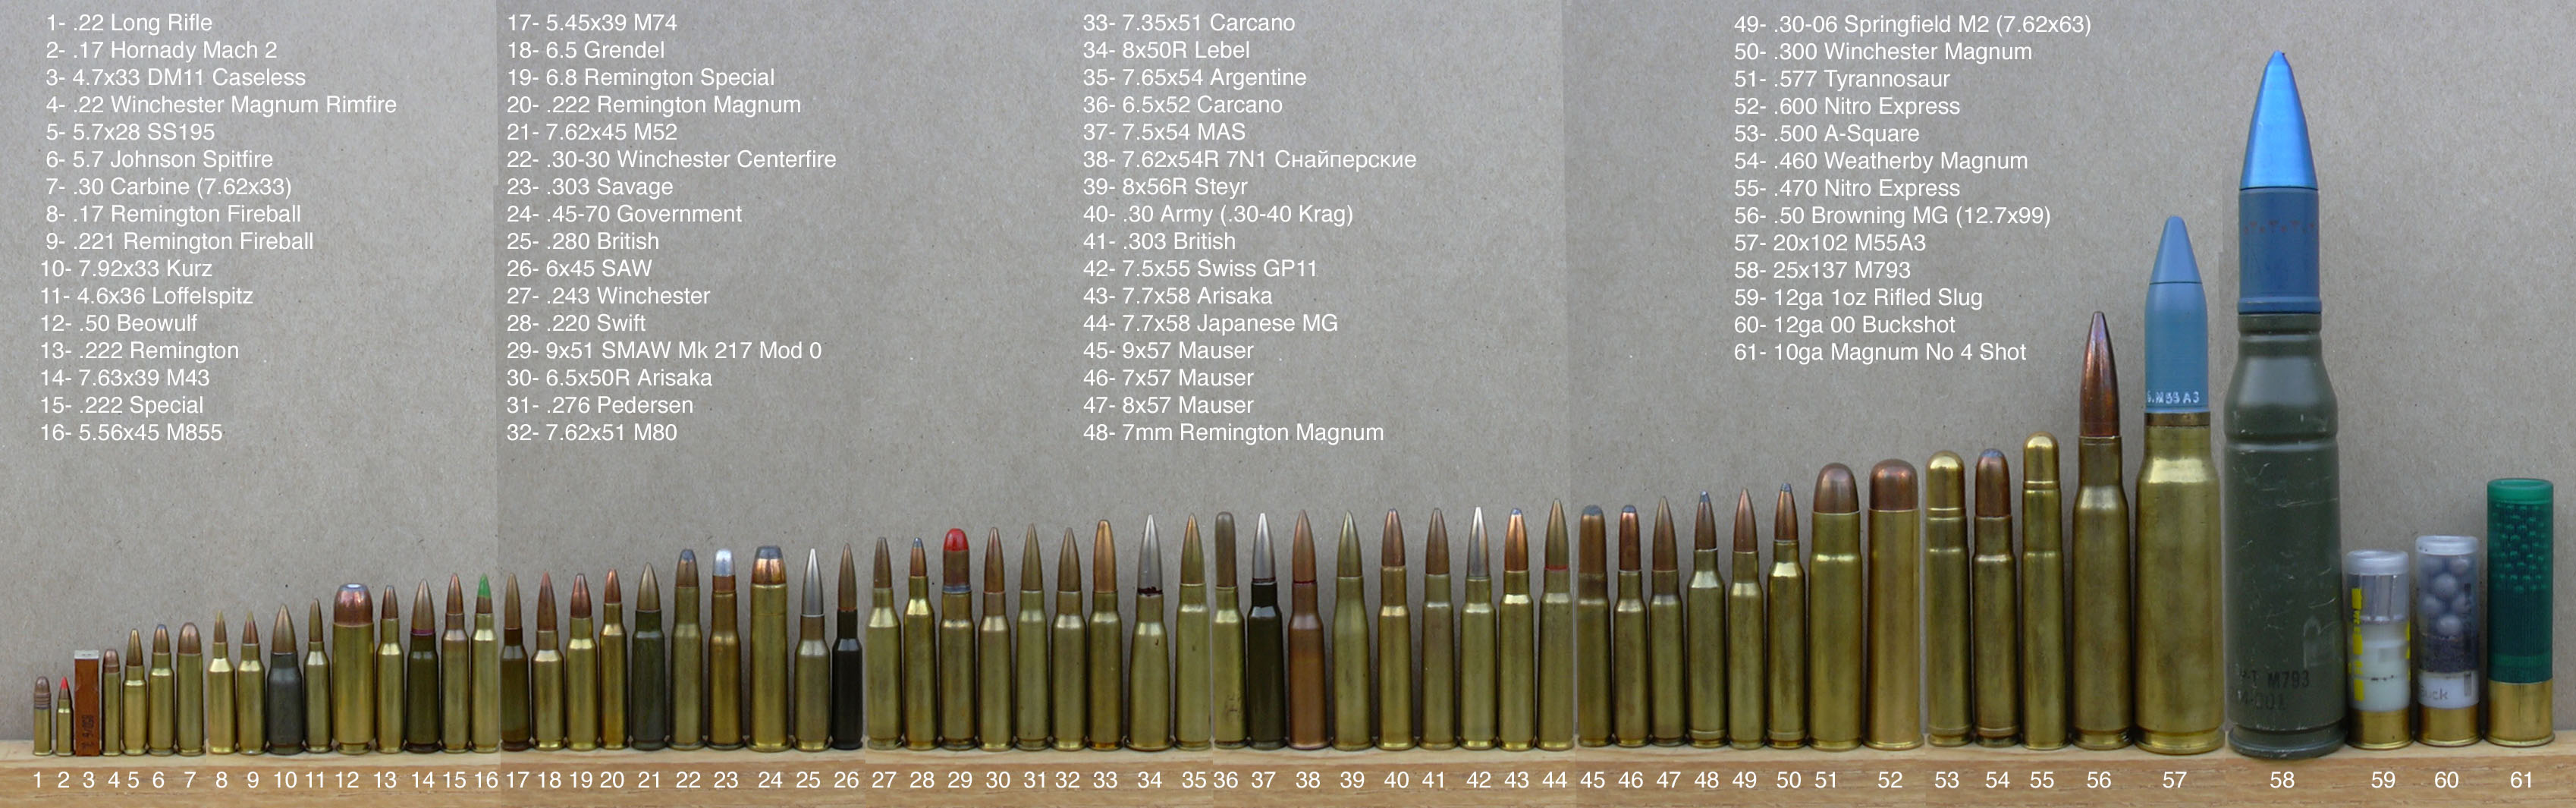 June 2007 Rifle Lineup